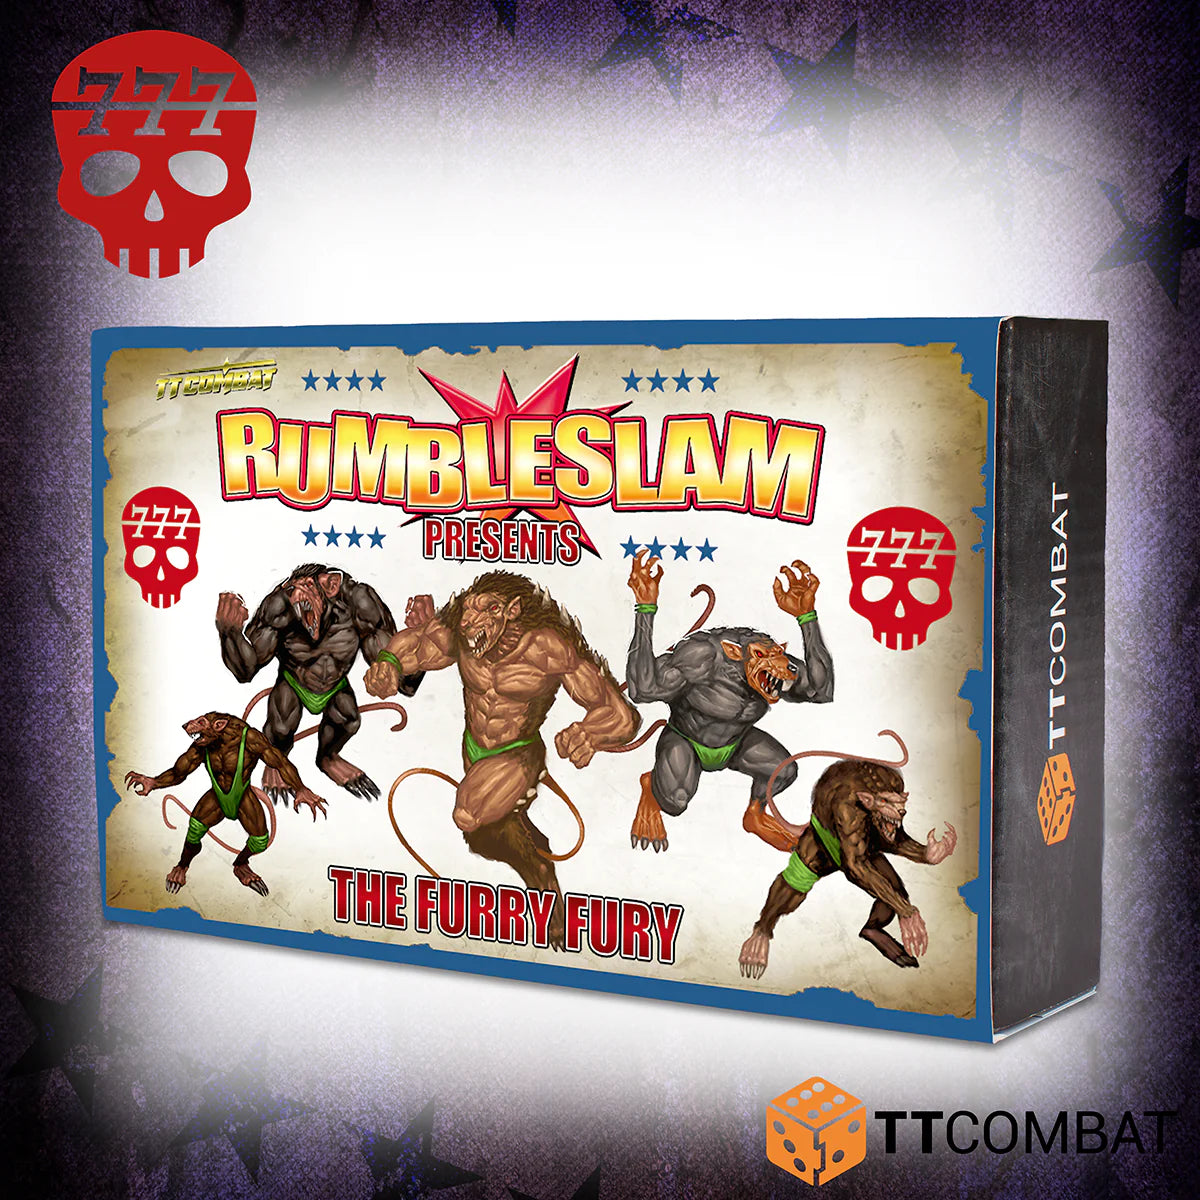 Rumbleslam: The Furry Fury